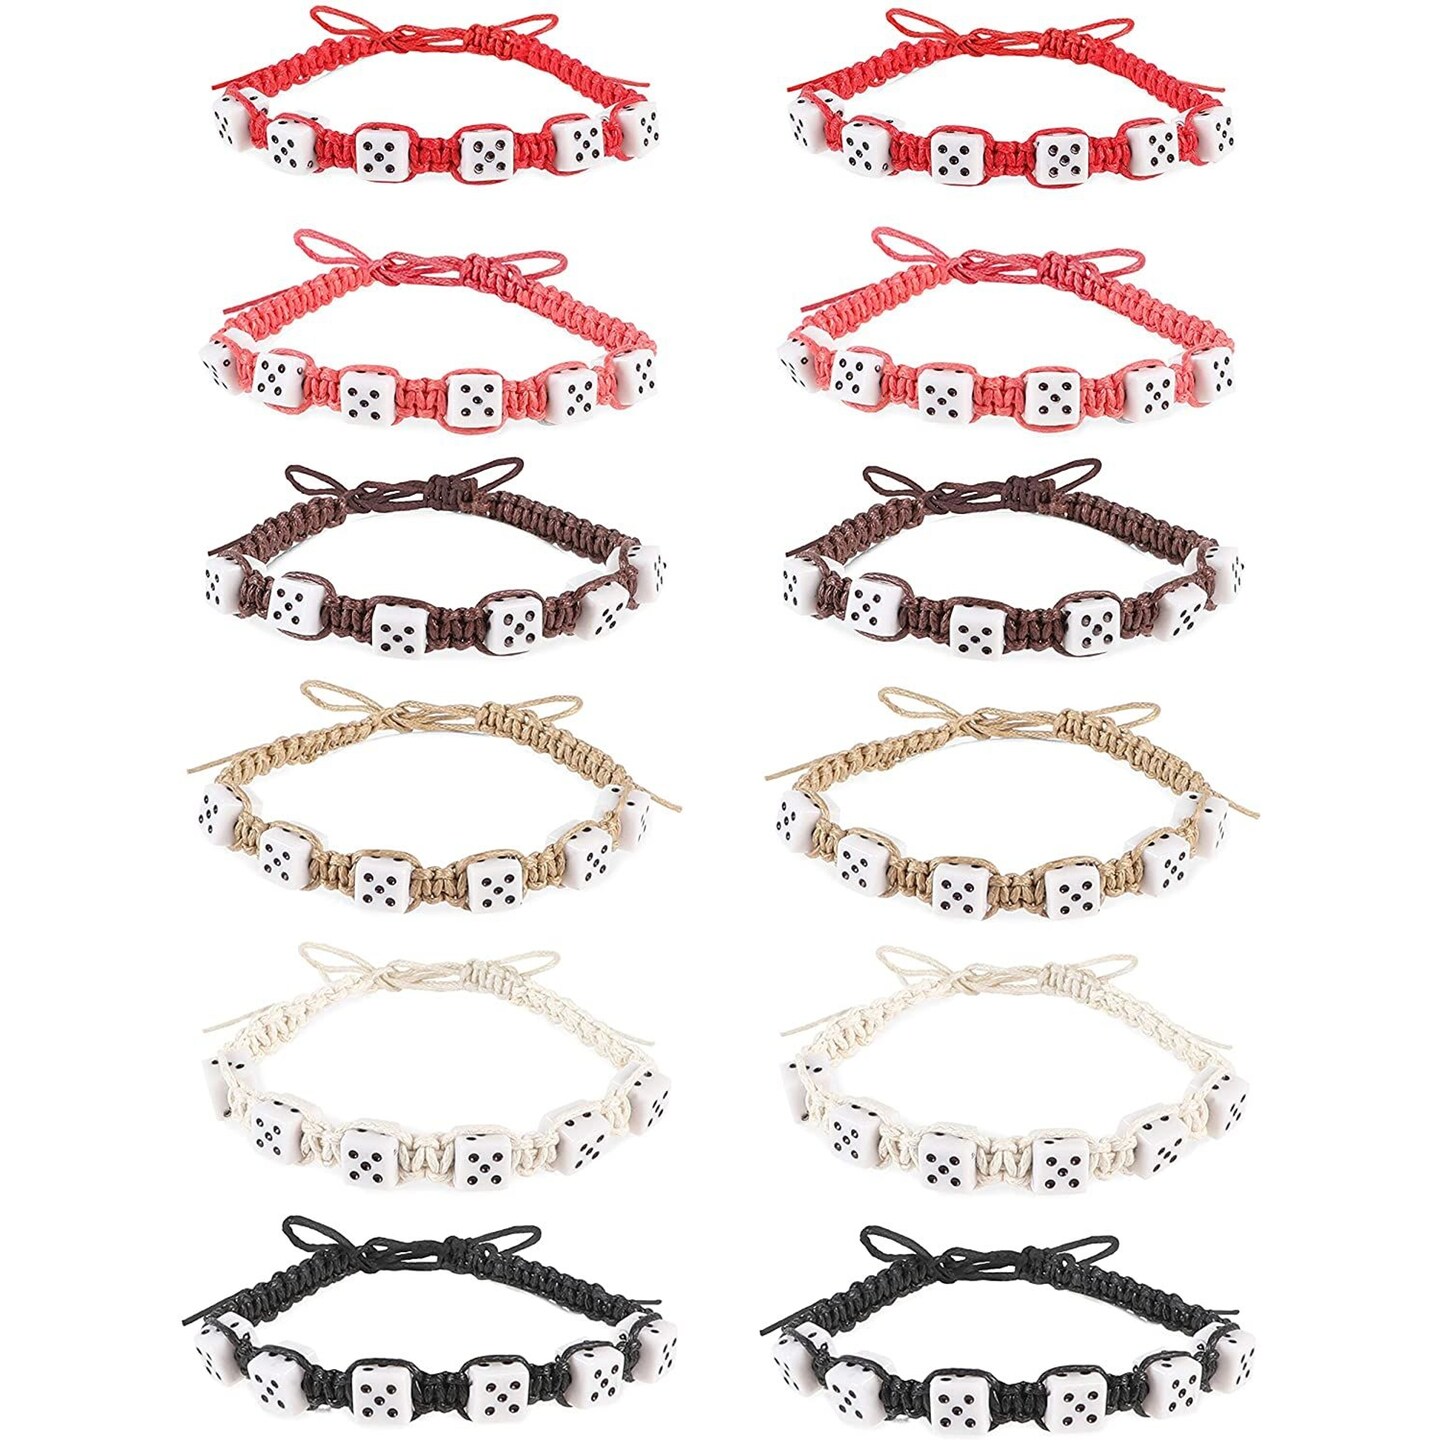 12-Pack Adjustable Cord Bracelet Dice Beads Wristbands for Kids Men Women, 6 Colors